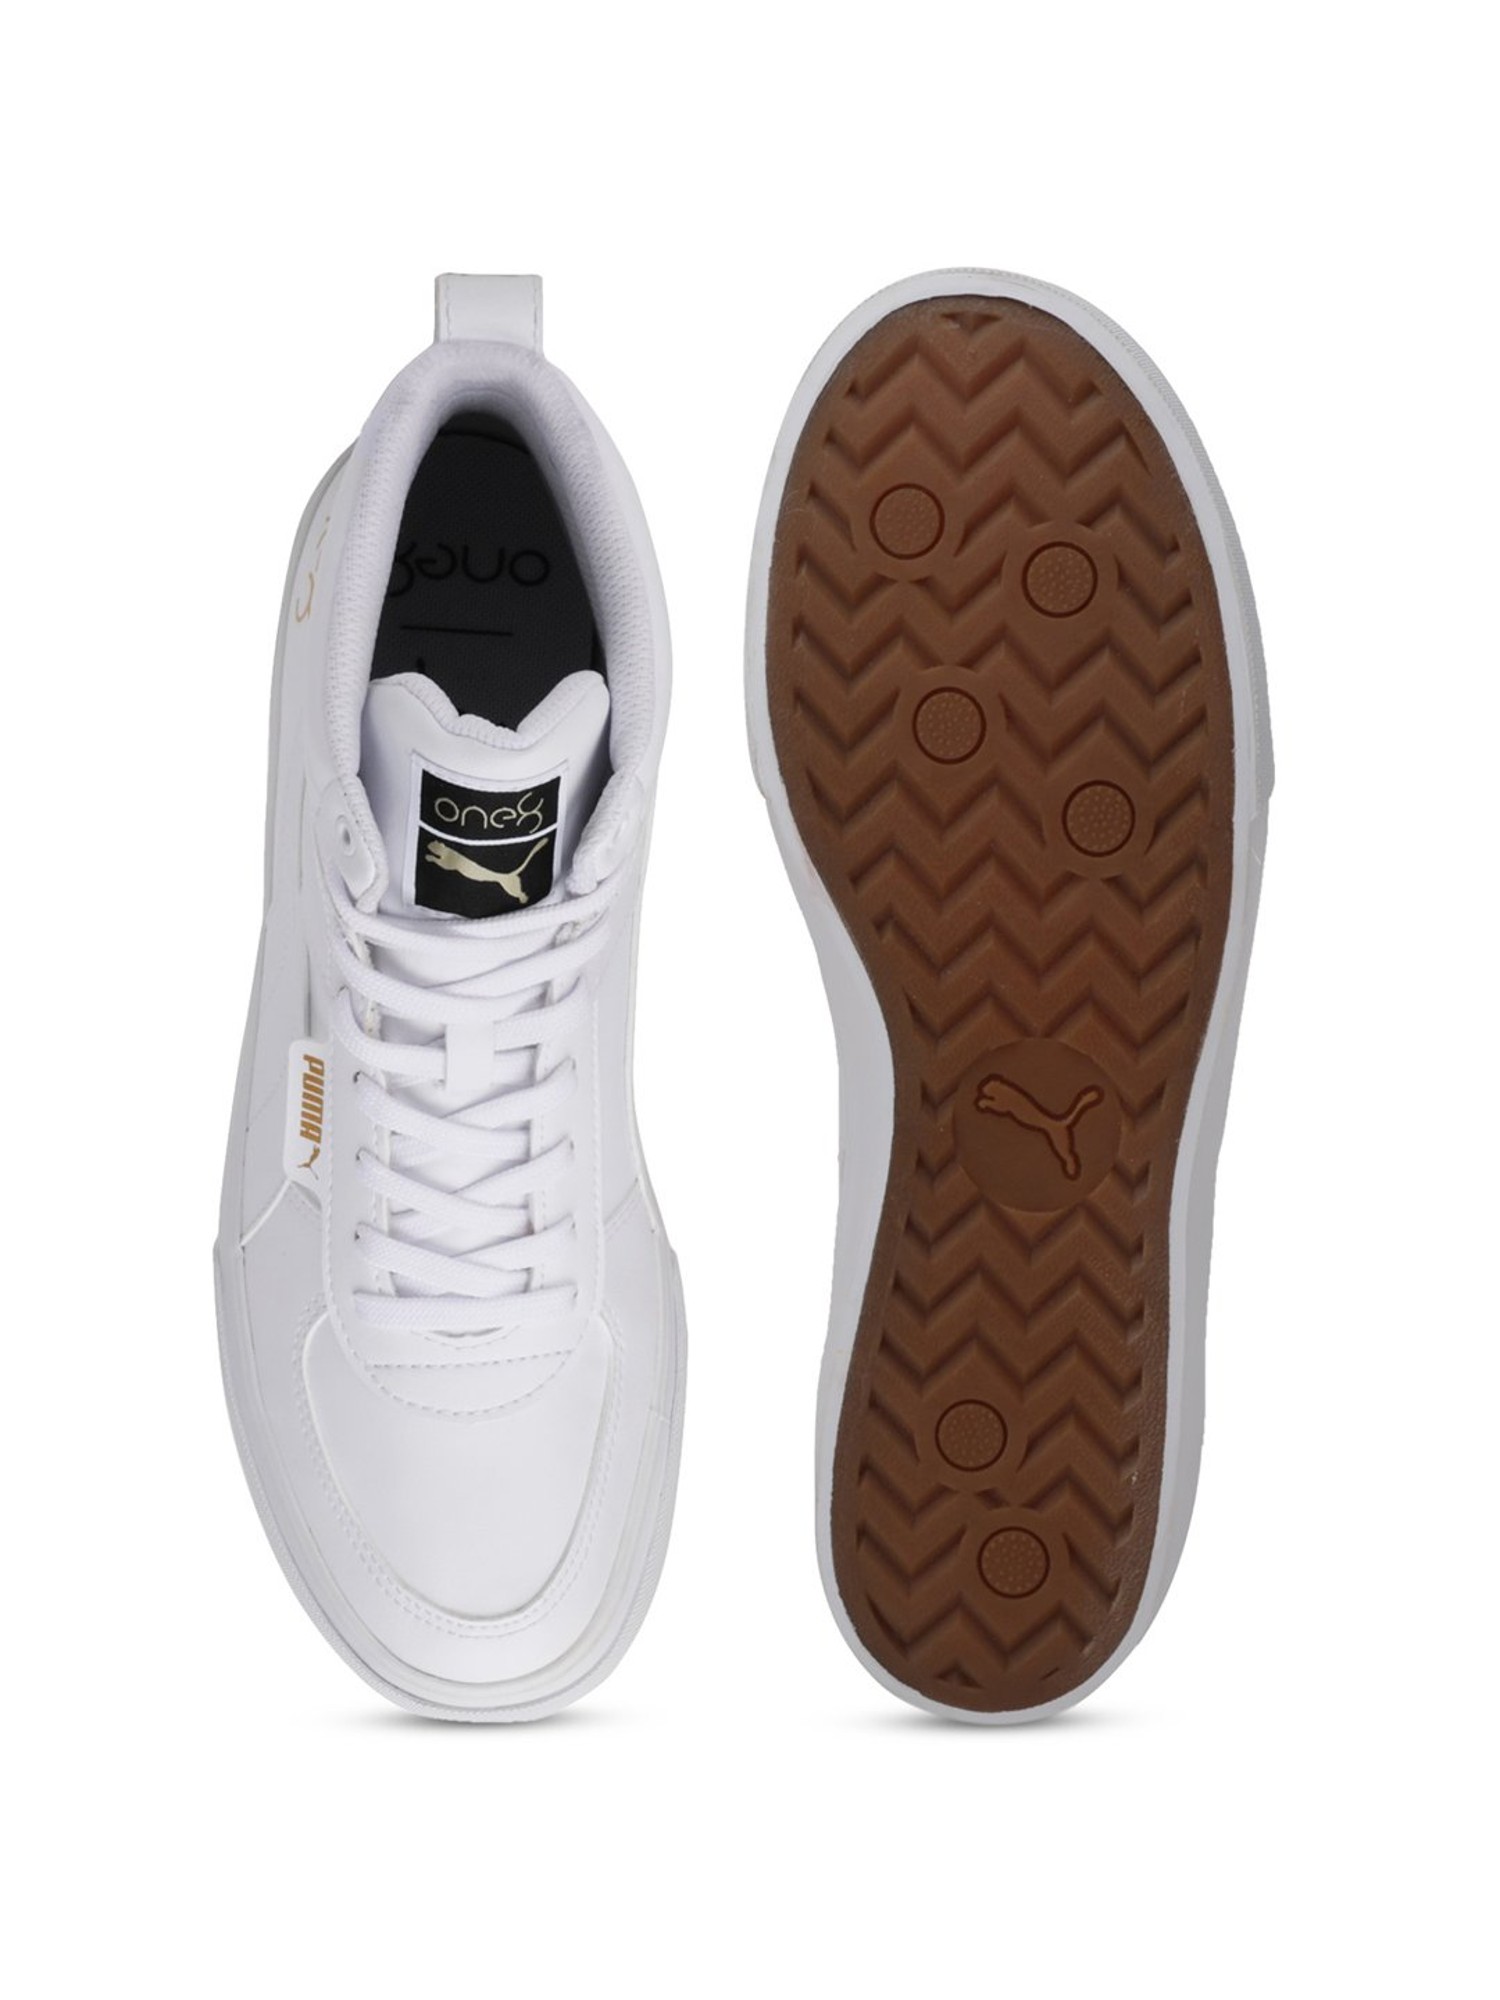 puma one 8 white shoes